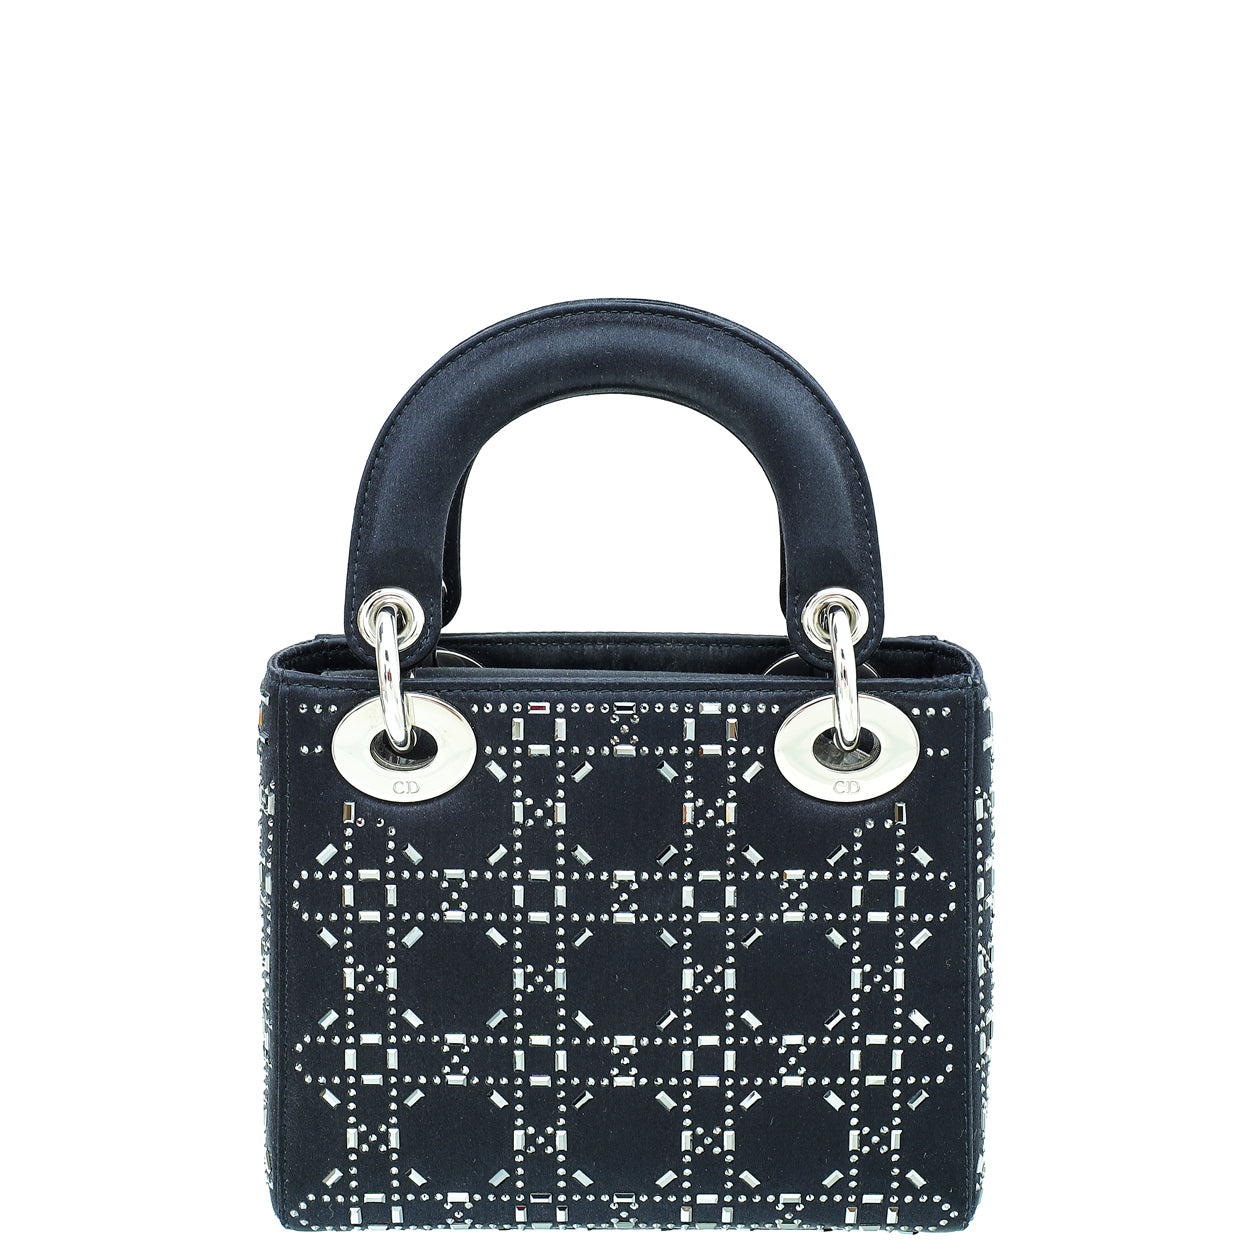 Christian Dior Black Satin Strass Cannage Lady Dior Mini Bag